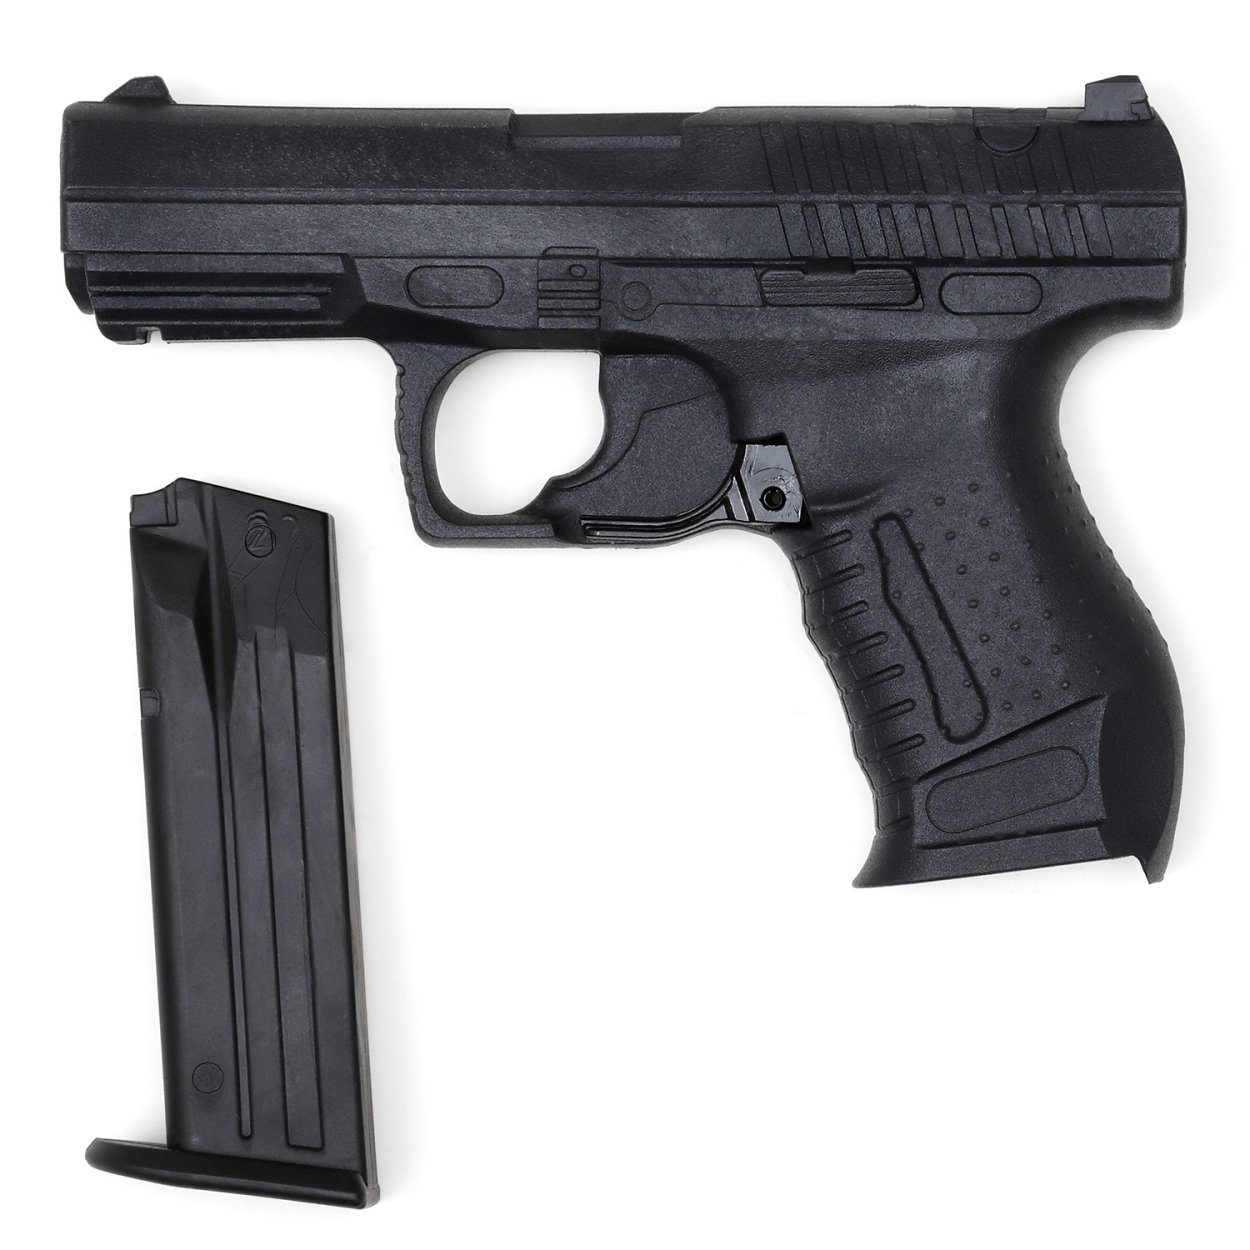 Realistic TP Rubber Glock Hand Gun W/ Removable Magazine - Click Image to Close